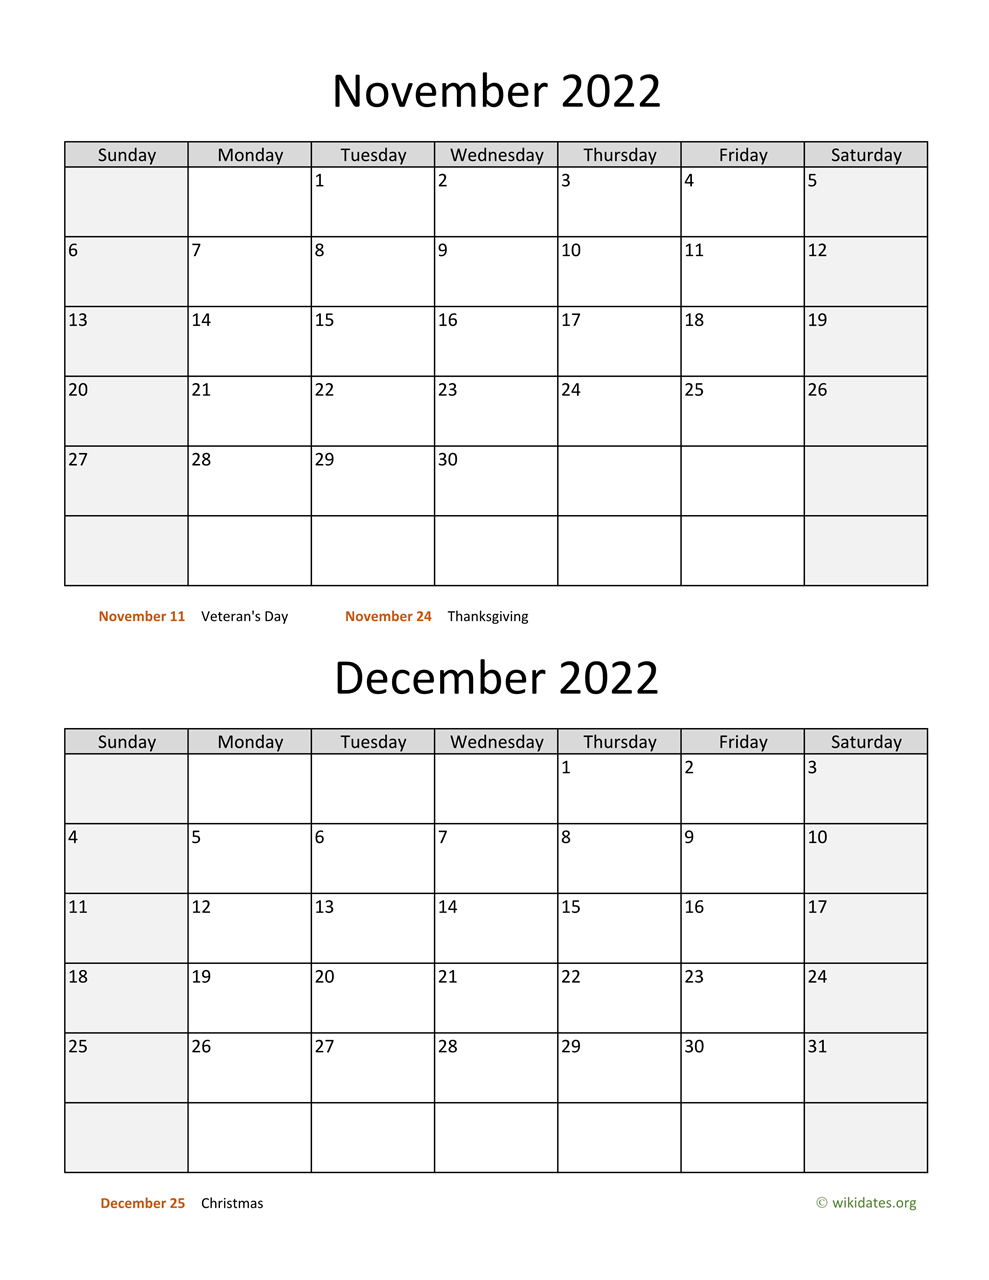 September To December 2022 Calendar November And December 2022 Calendar | Wikidates.org